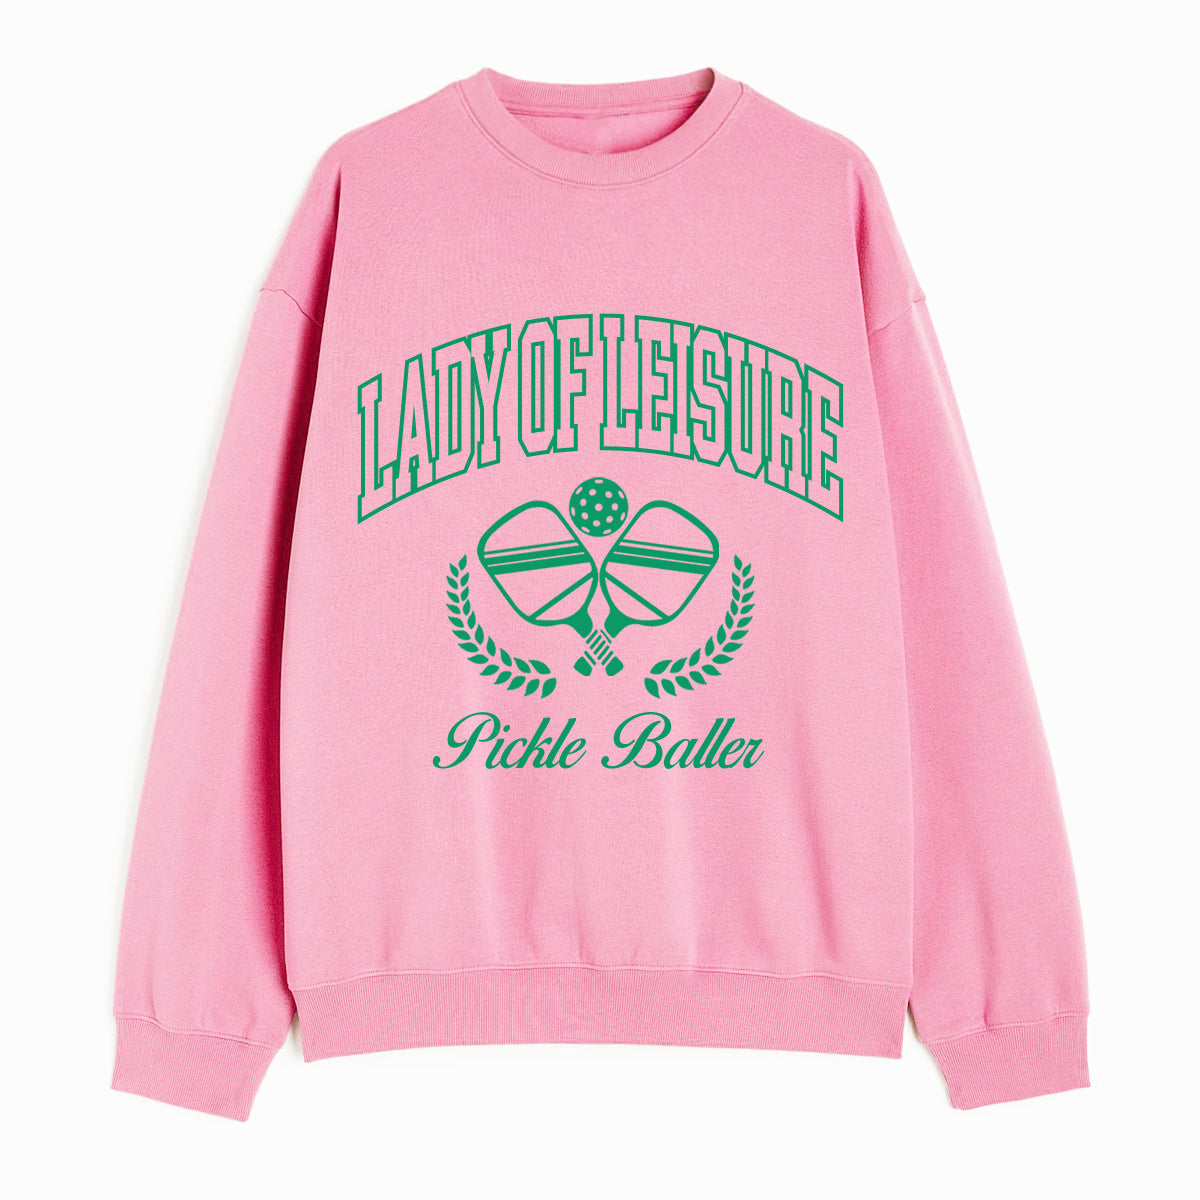 Lady of Leisure Pickle Baller Sweatshirt